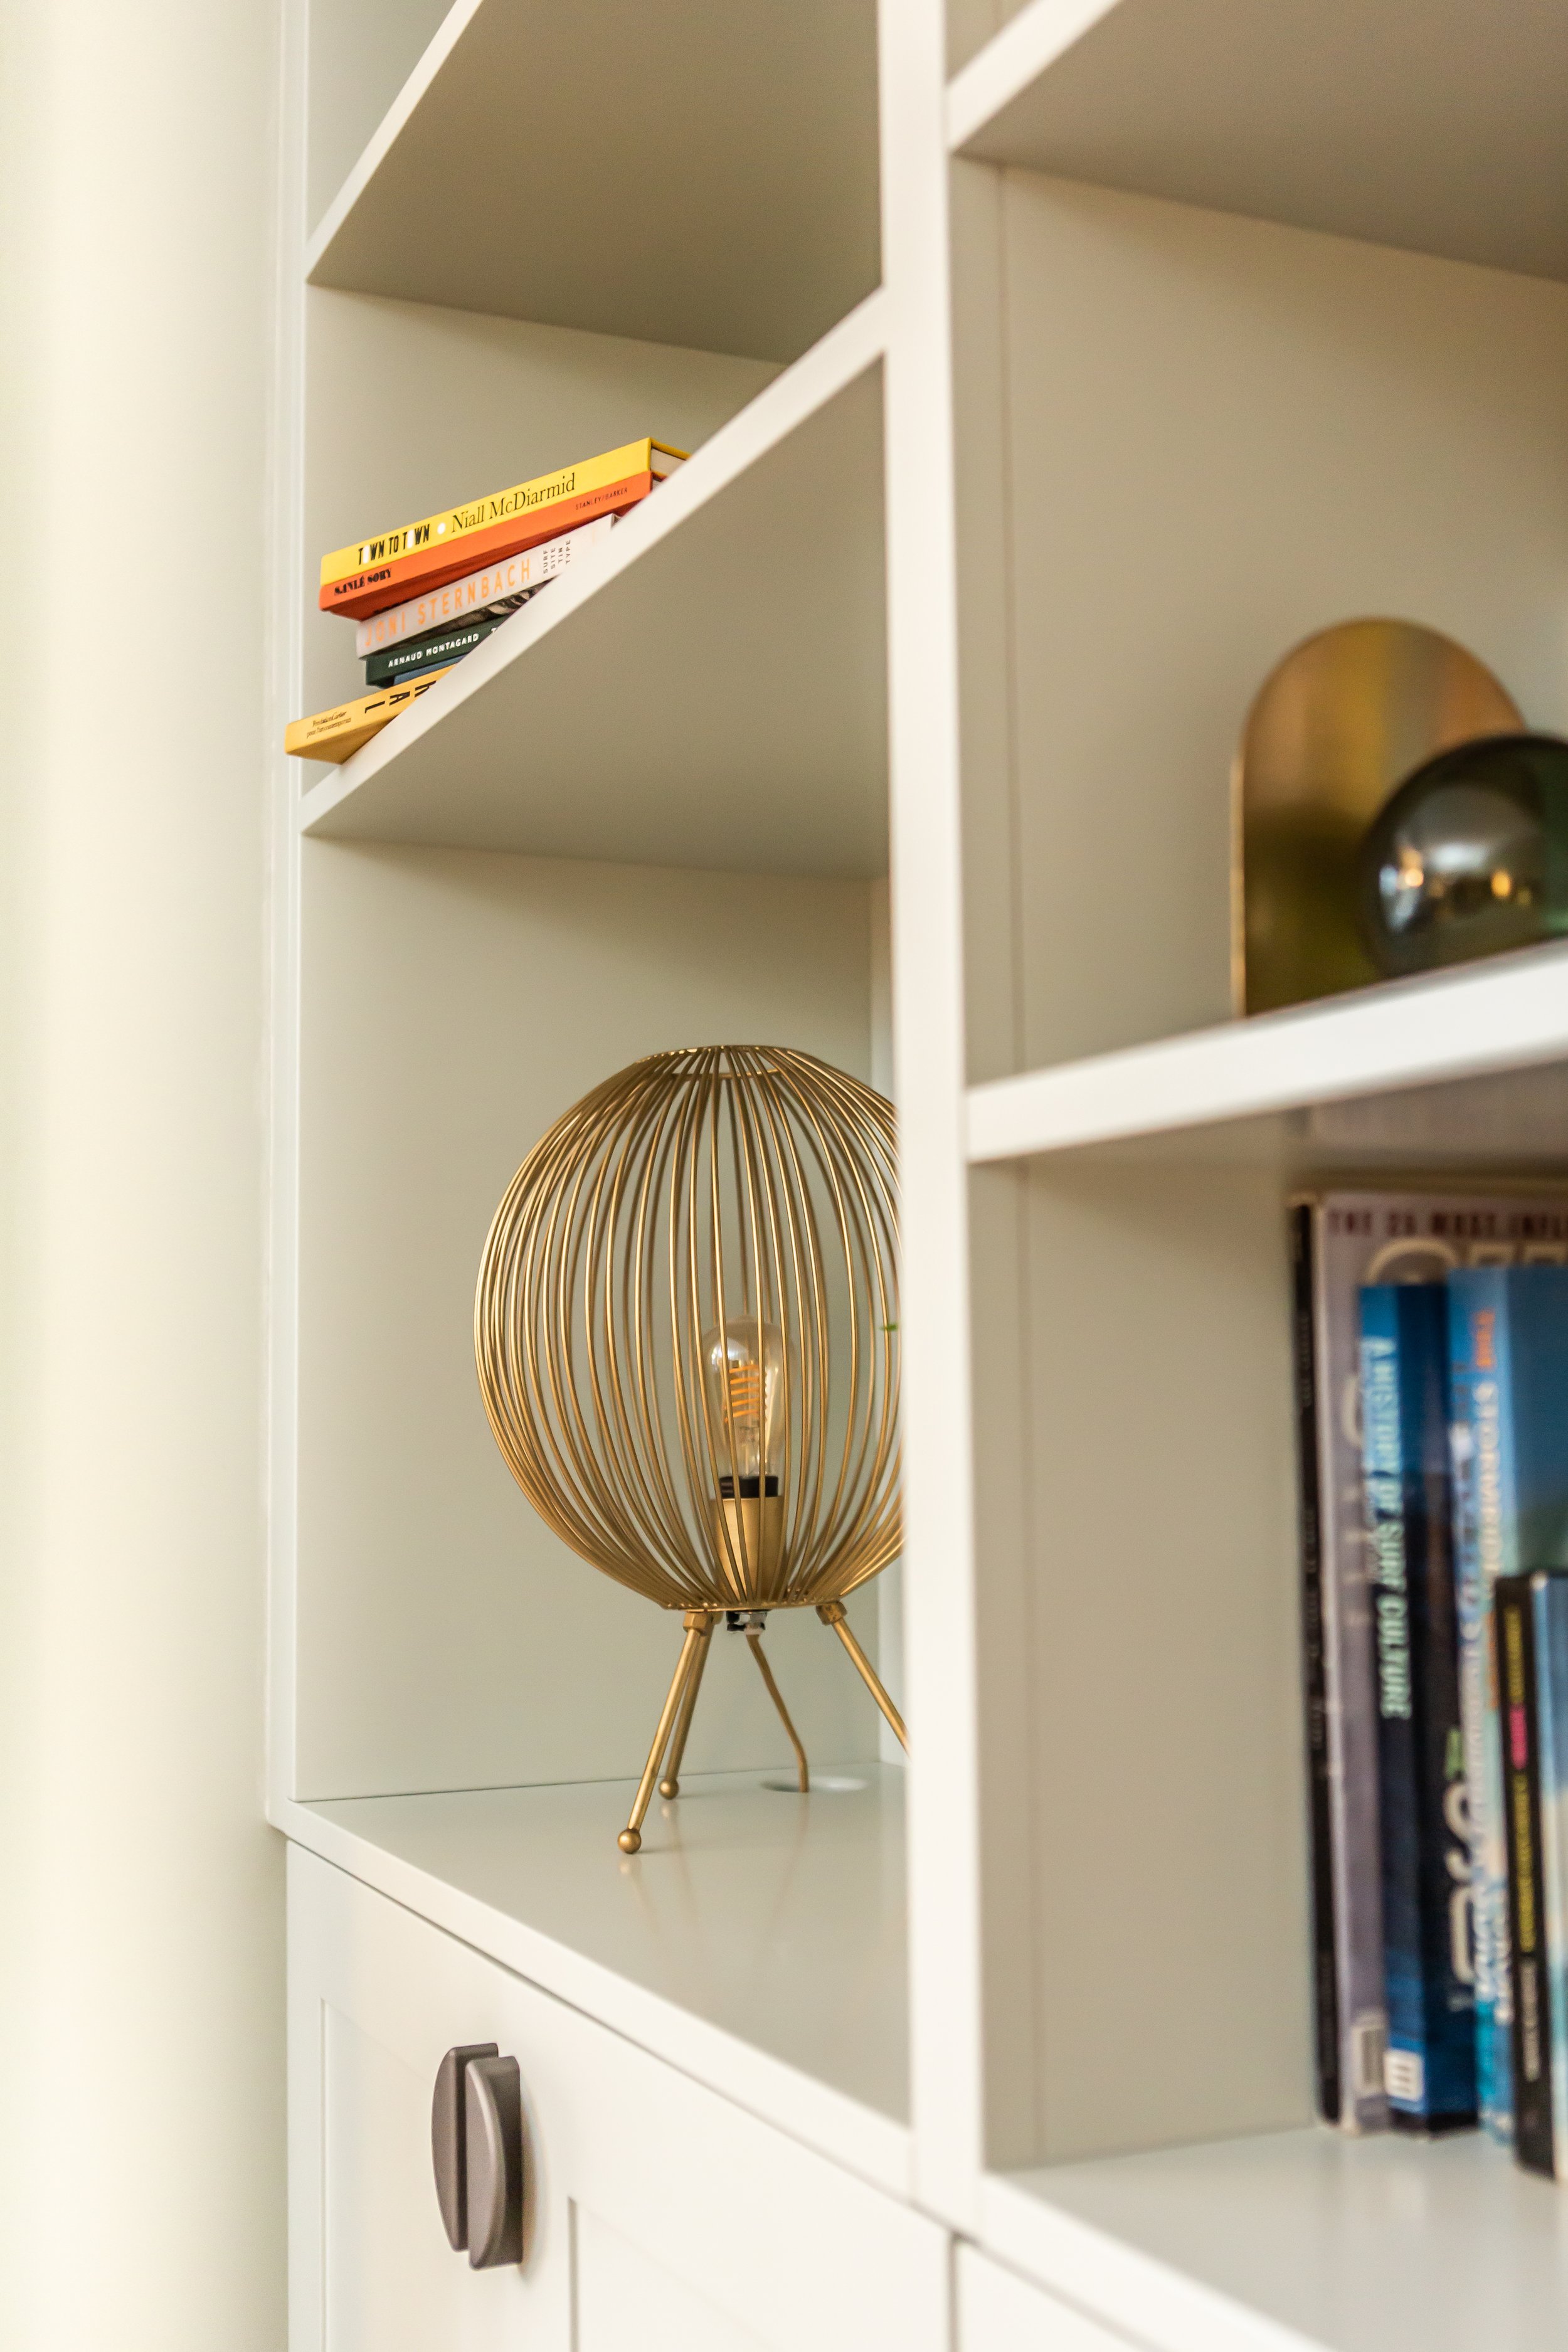 Pete Hill Design - Bookcase - Fitted Furniture.jpg